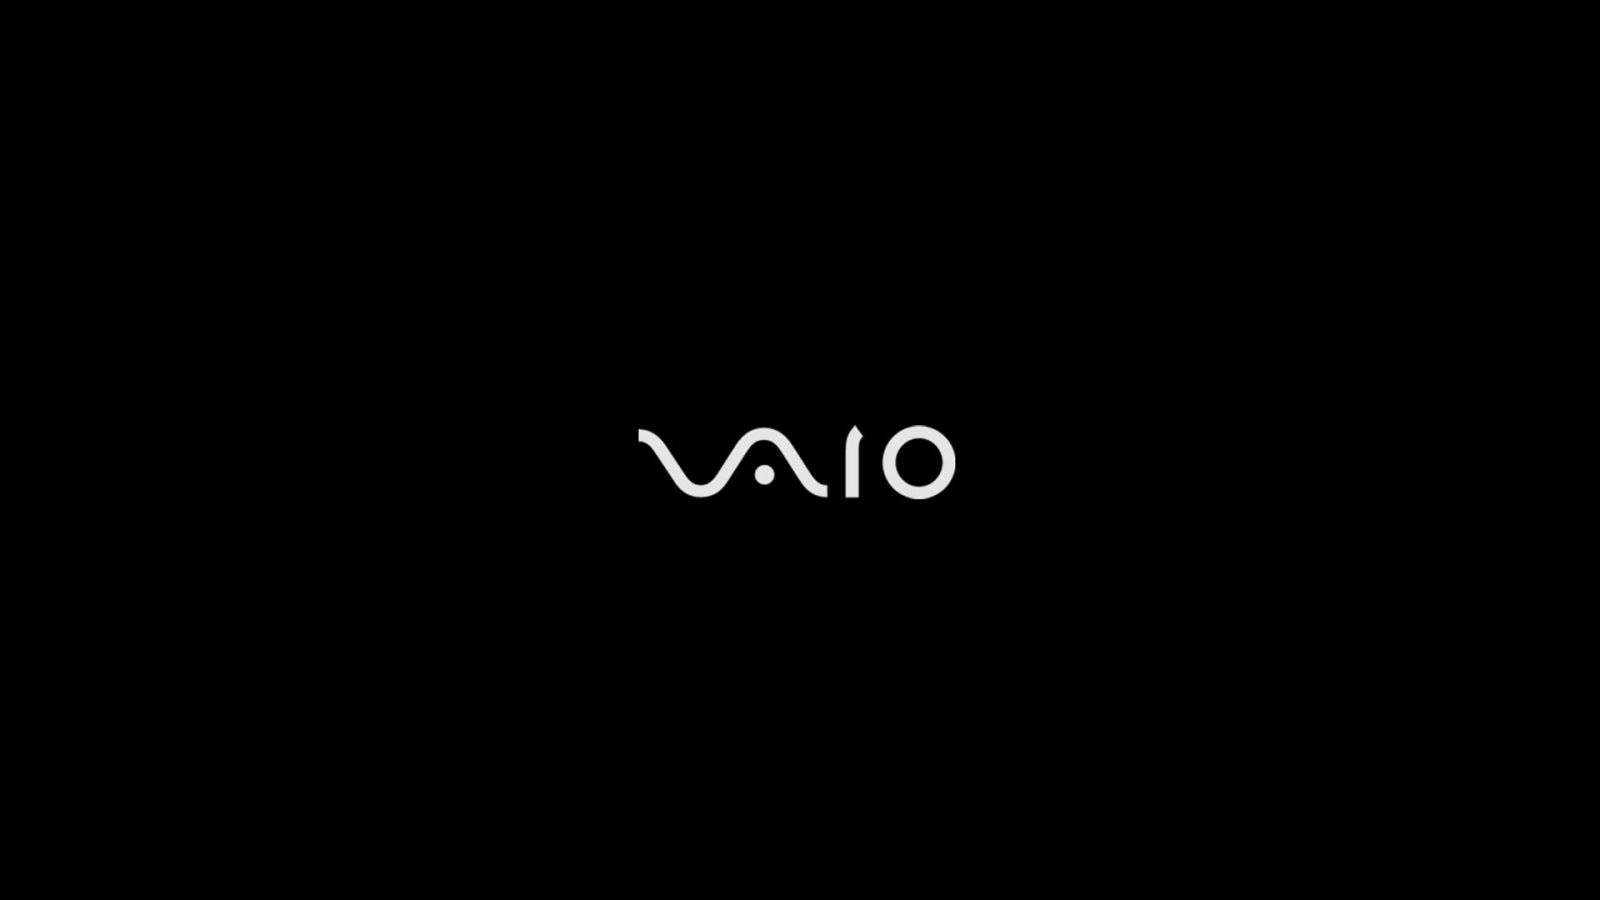 Vaio Black for 1600 x 900 HDTV resolution